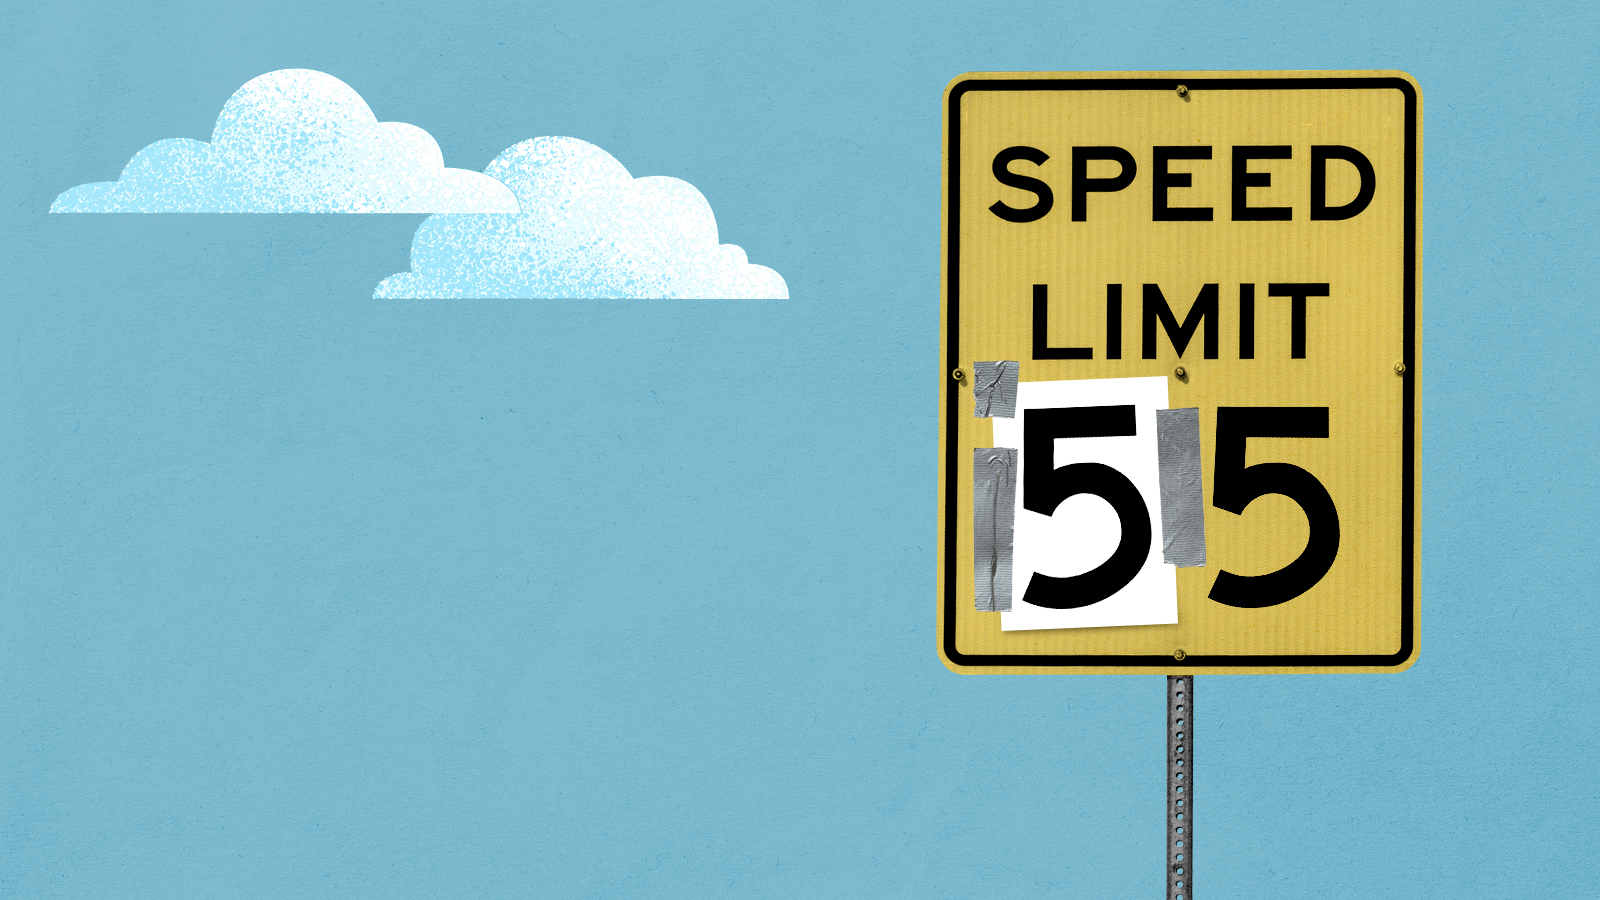 A speed limit sign.